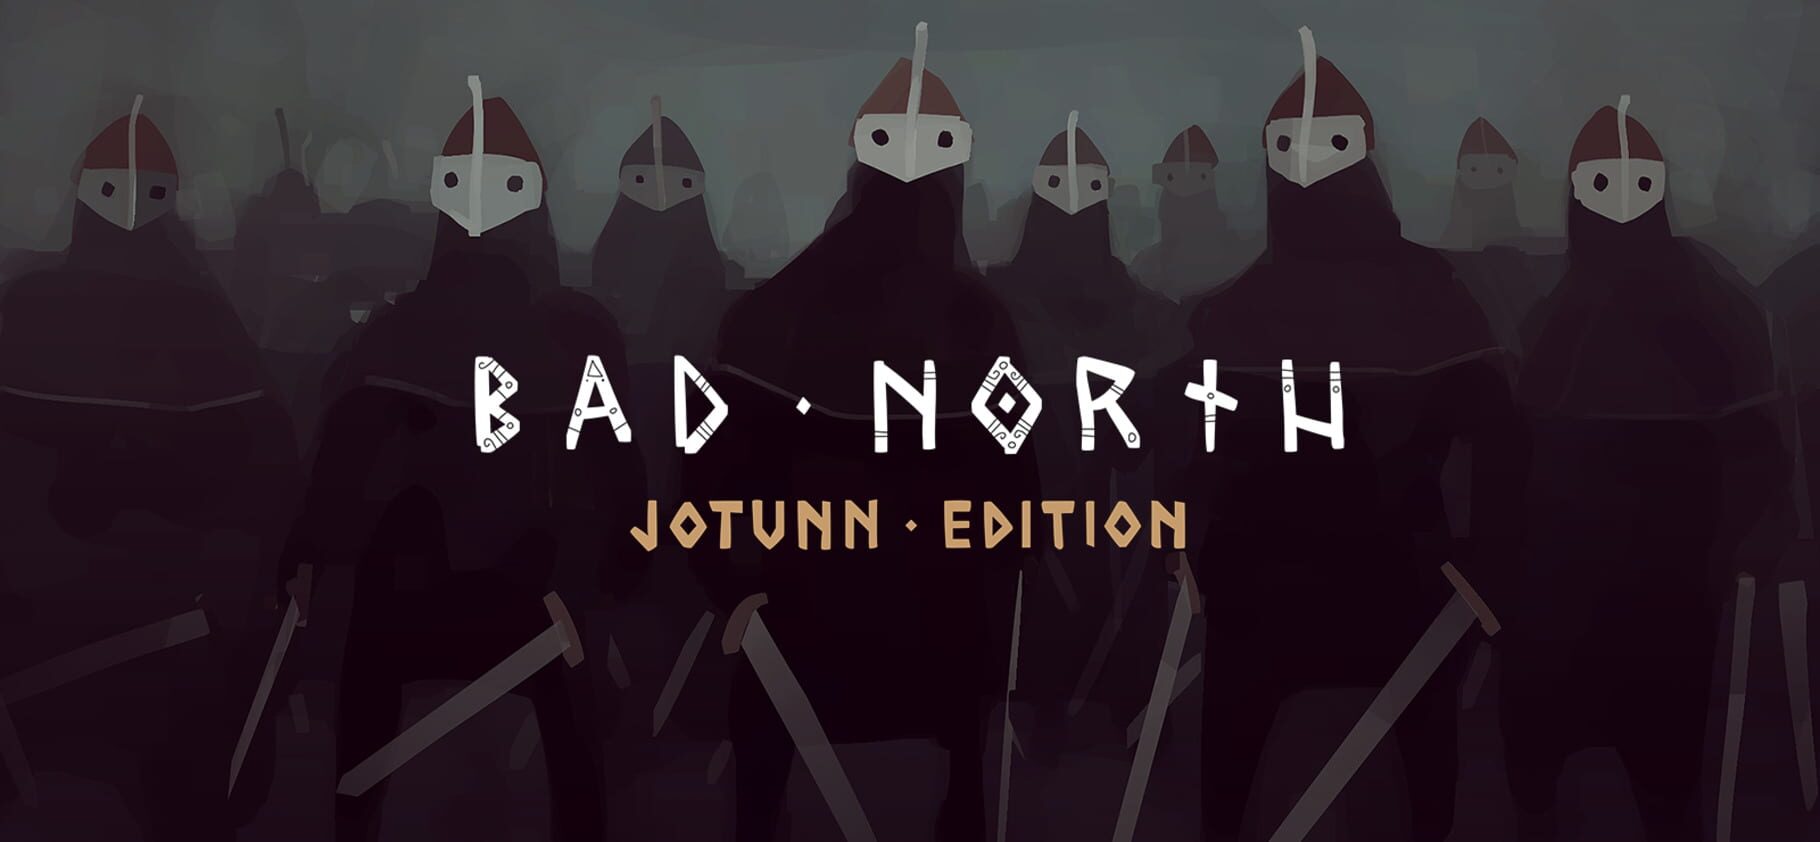 Bad North: Jotunn Edition artwork